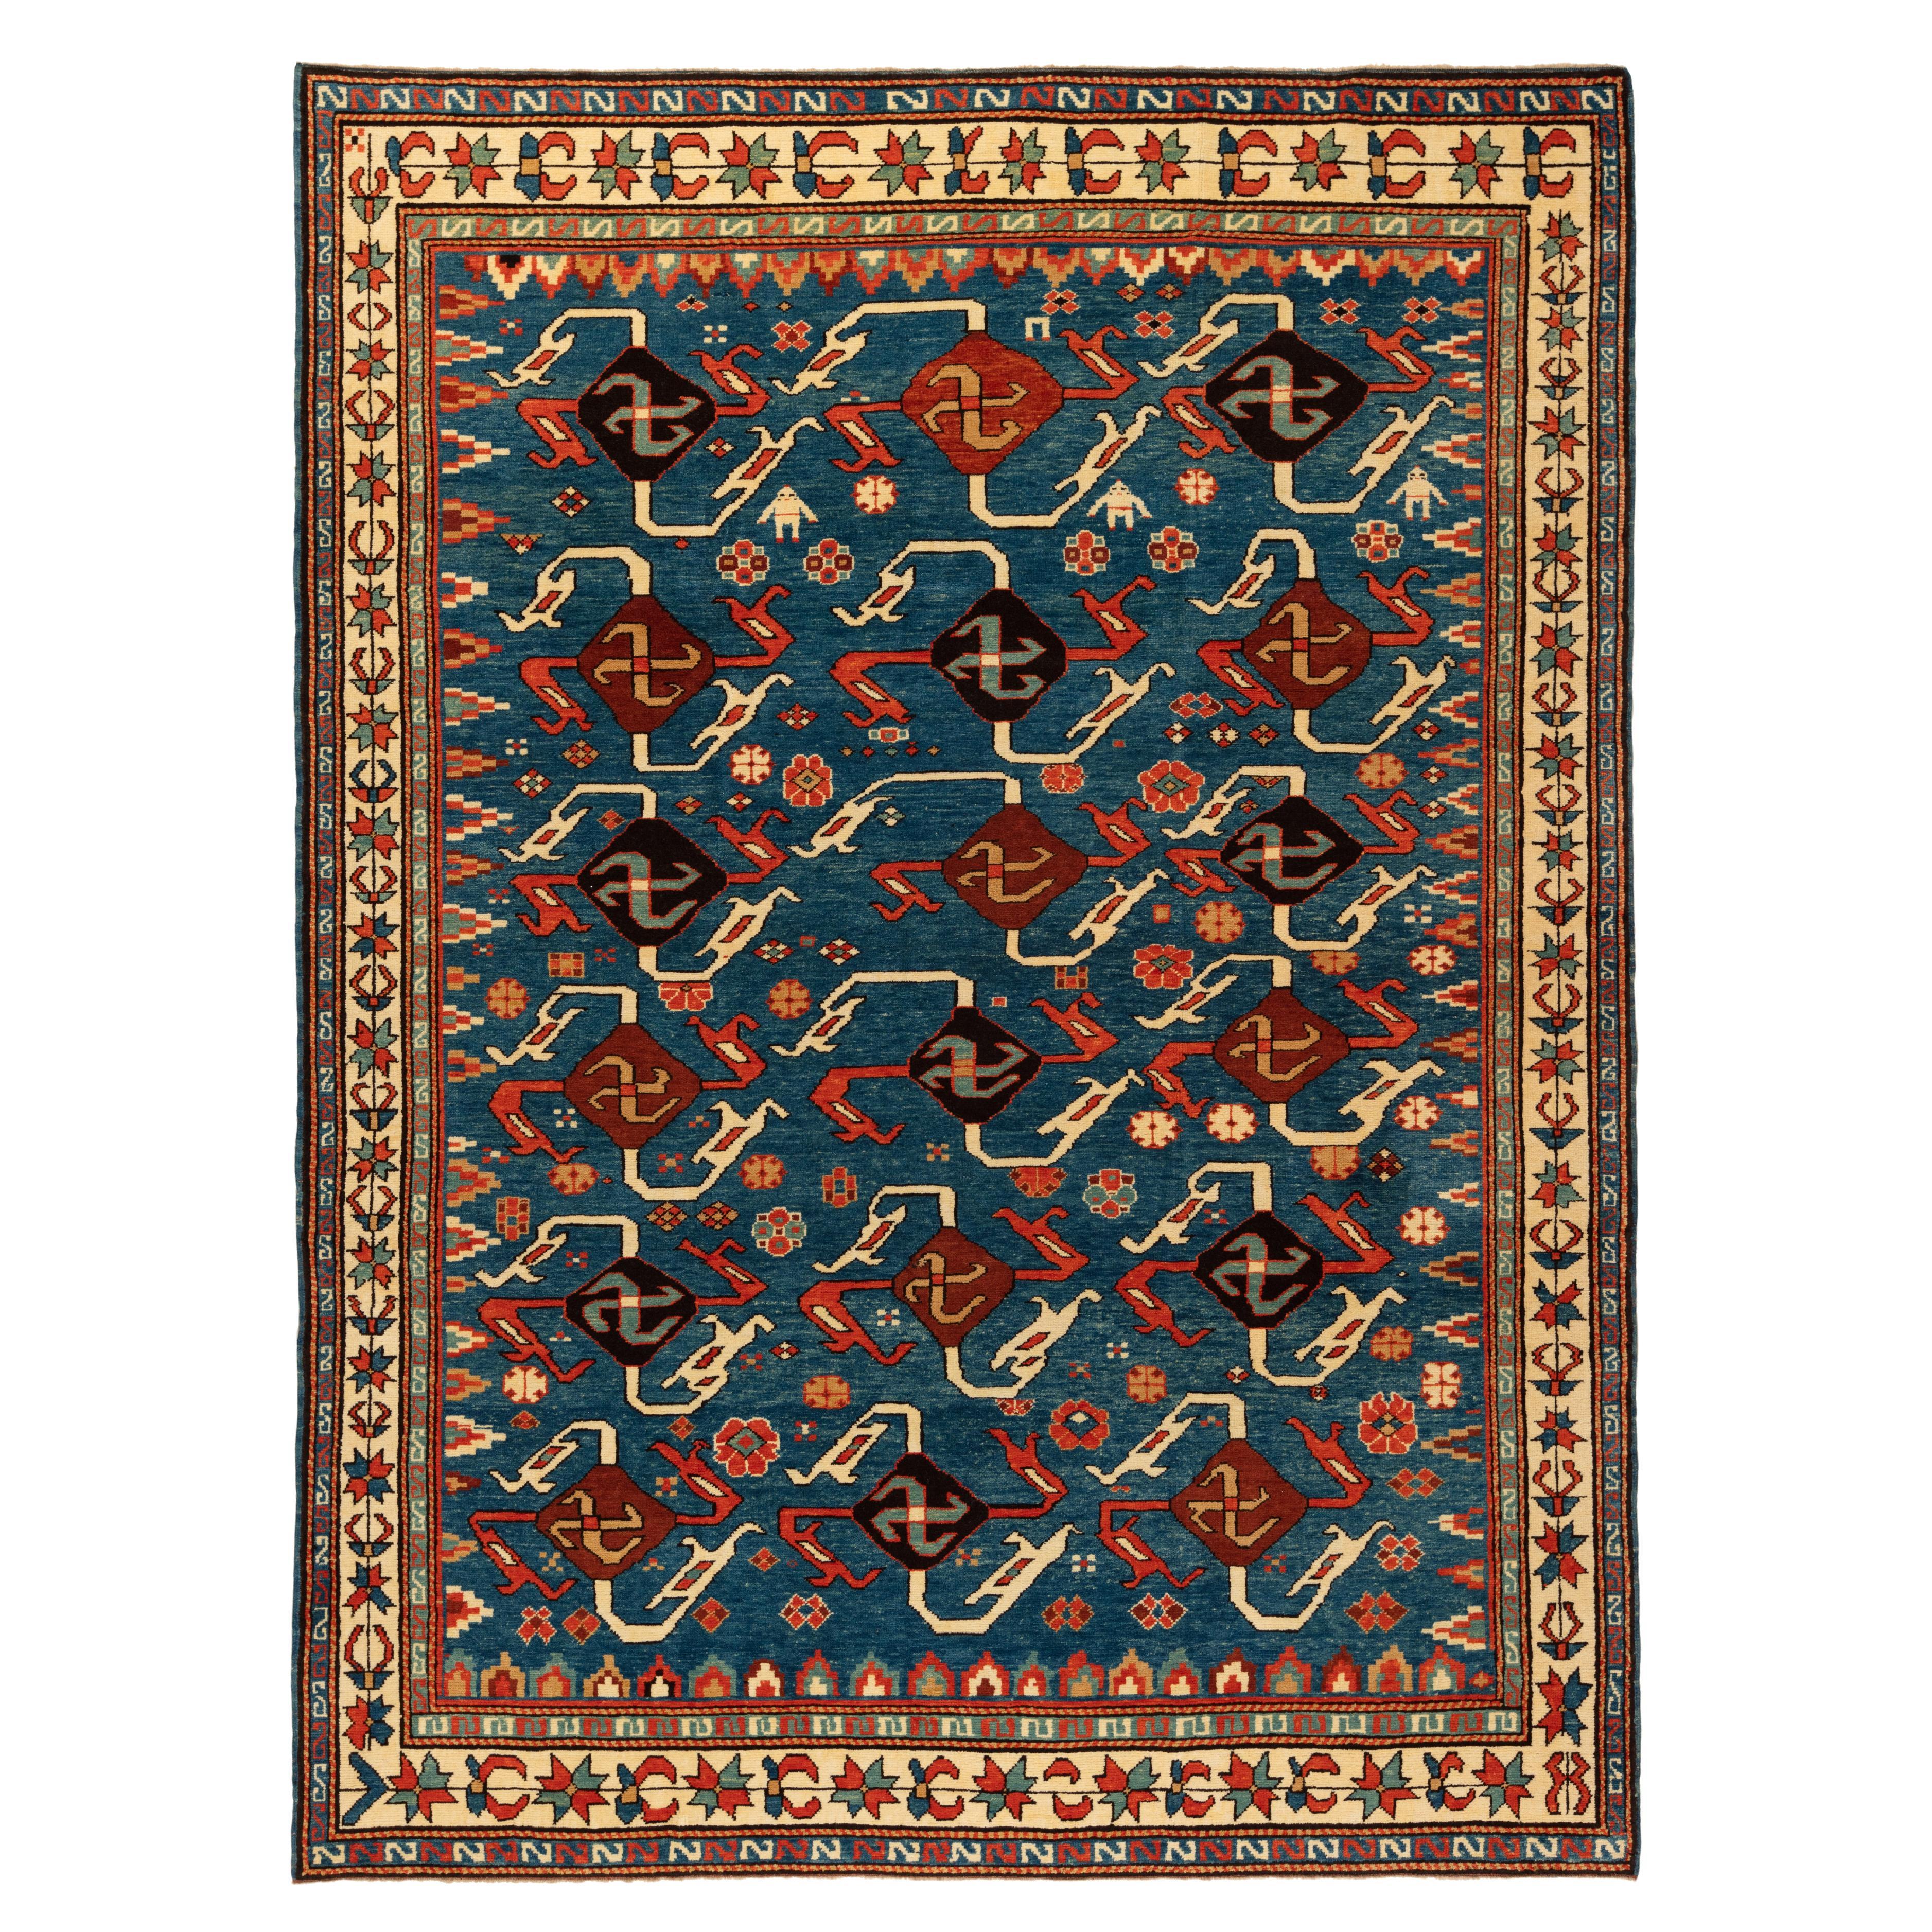 Ararat Rugs Swastika Design Rug, Antique Caucasus Revival Carpet, Natural Dyed For Sale